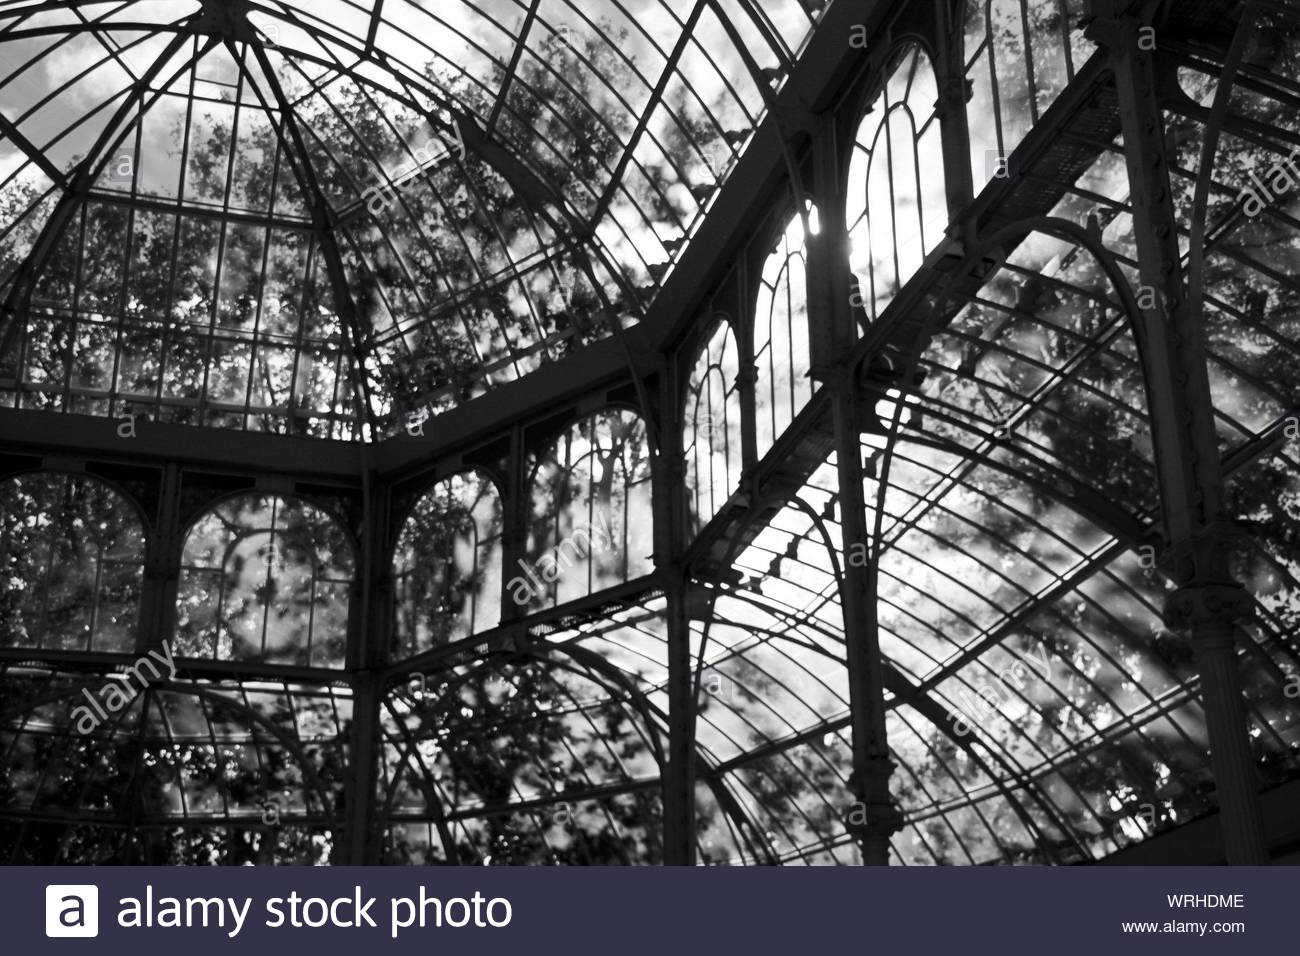 greenhouse1.jpg